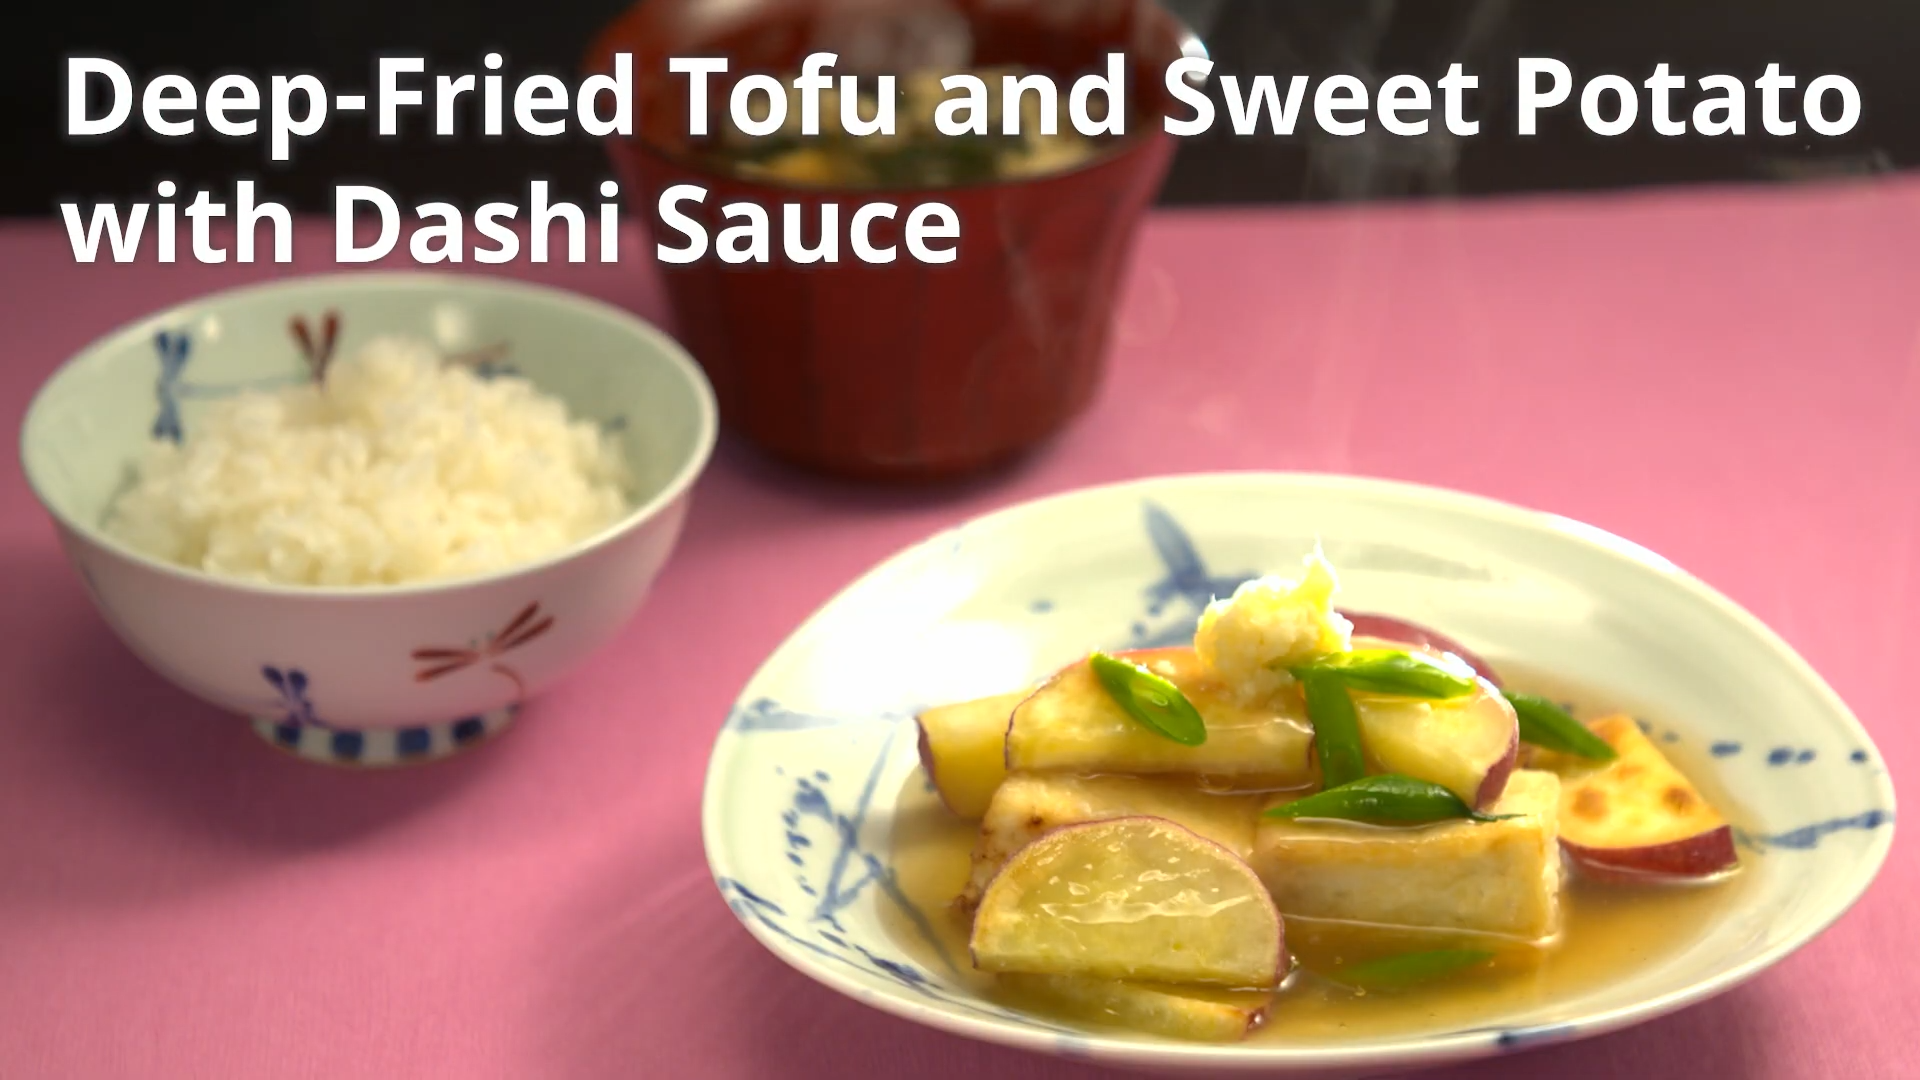 Deep-Fried Tofu and Sweet Potato with Dashi Sauce